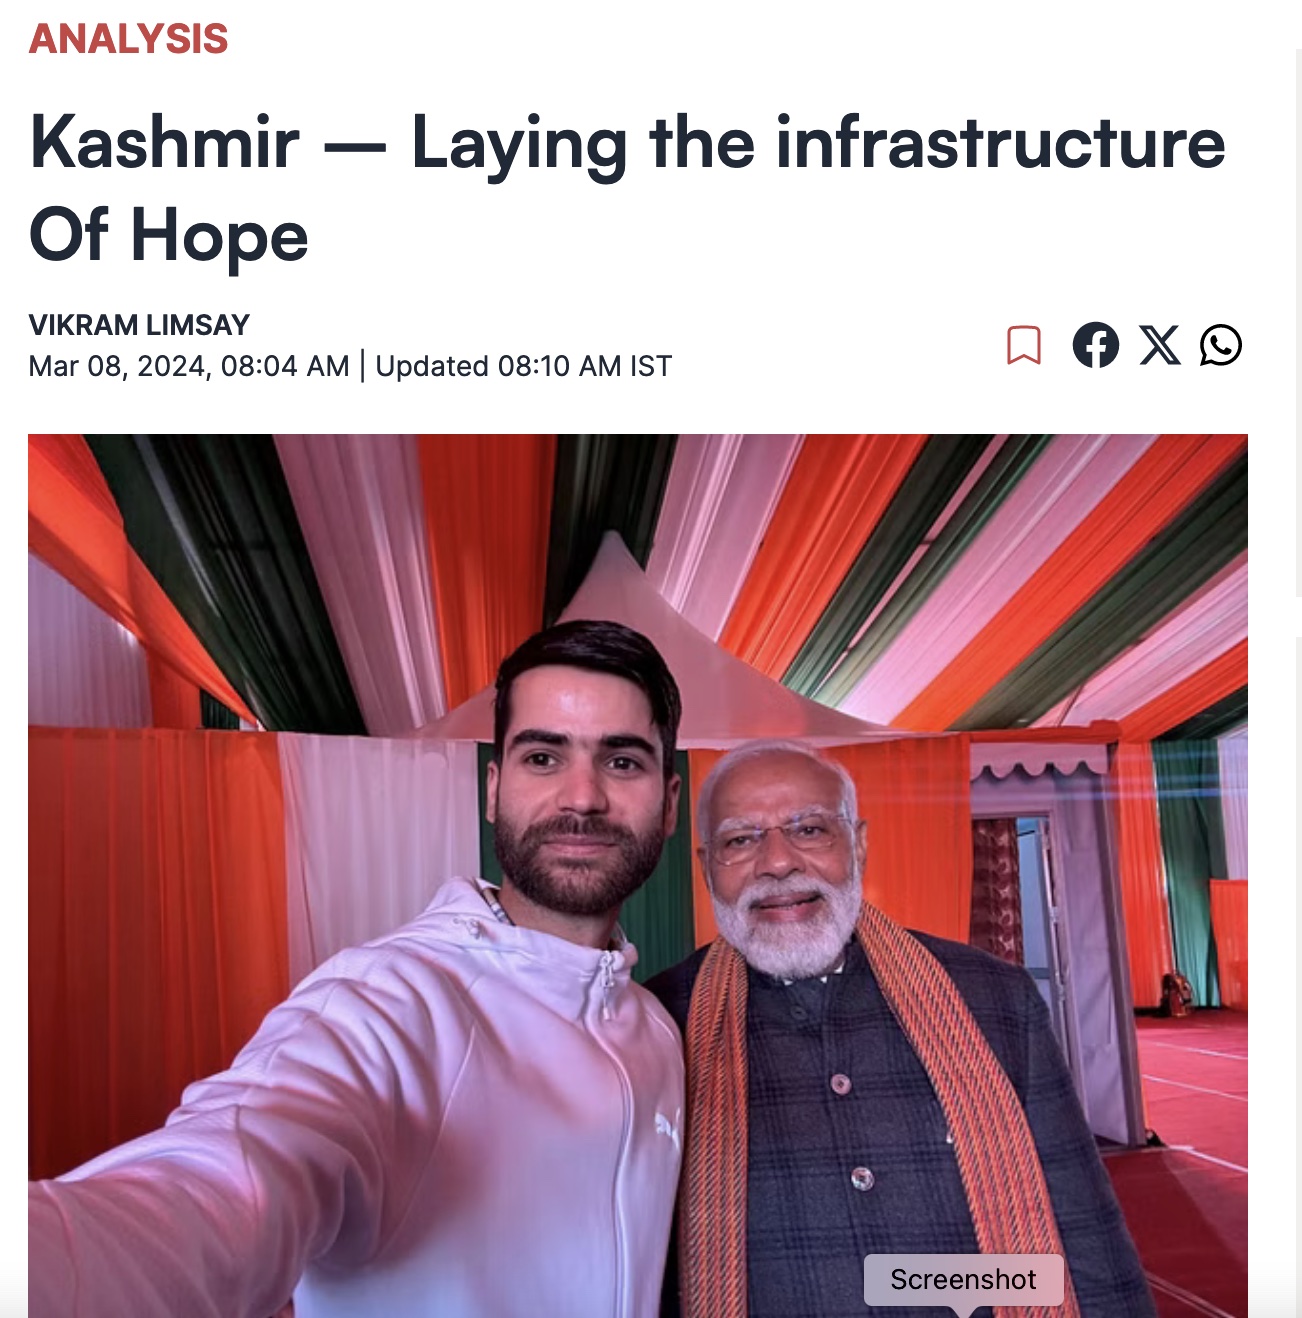 Kashmir Infrastructure